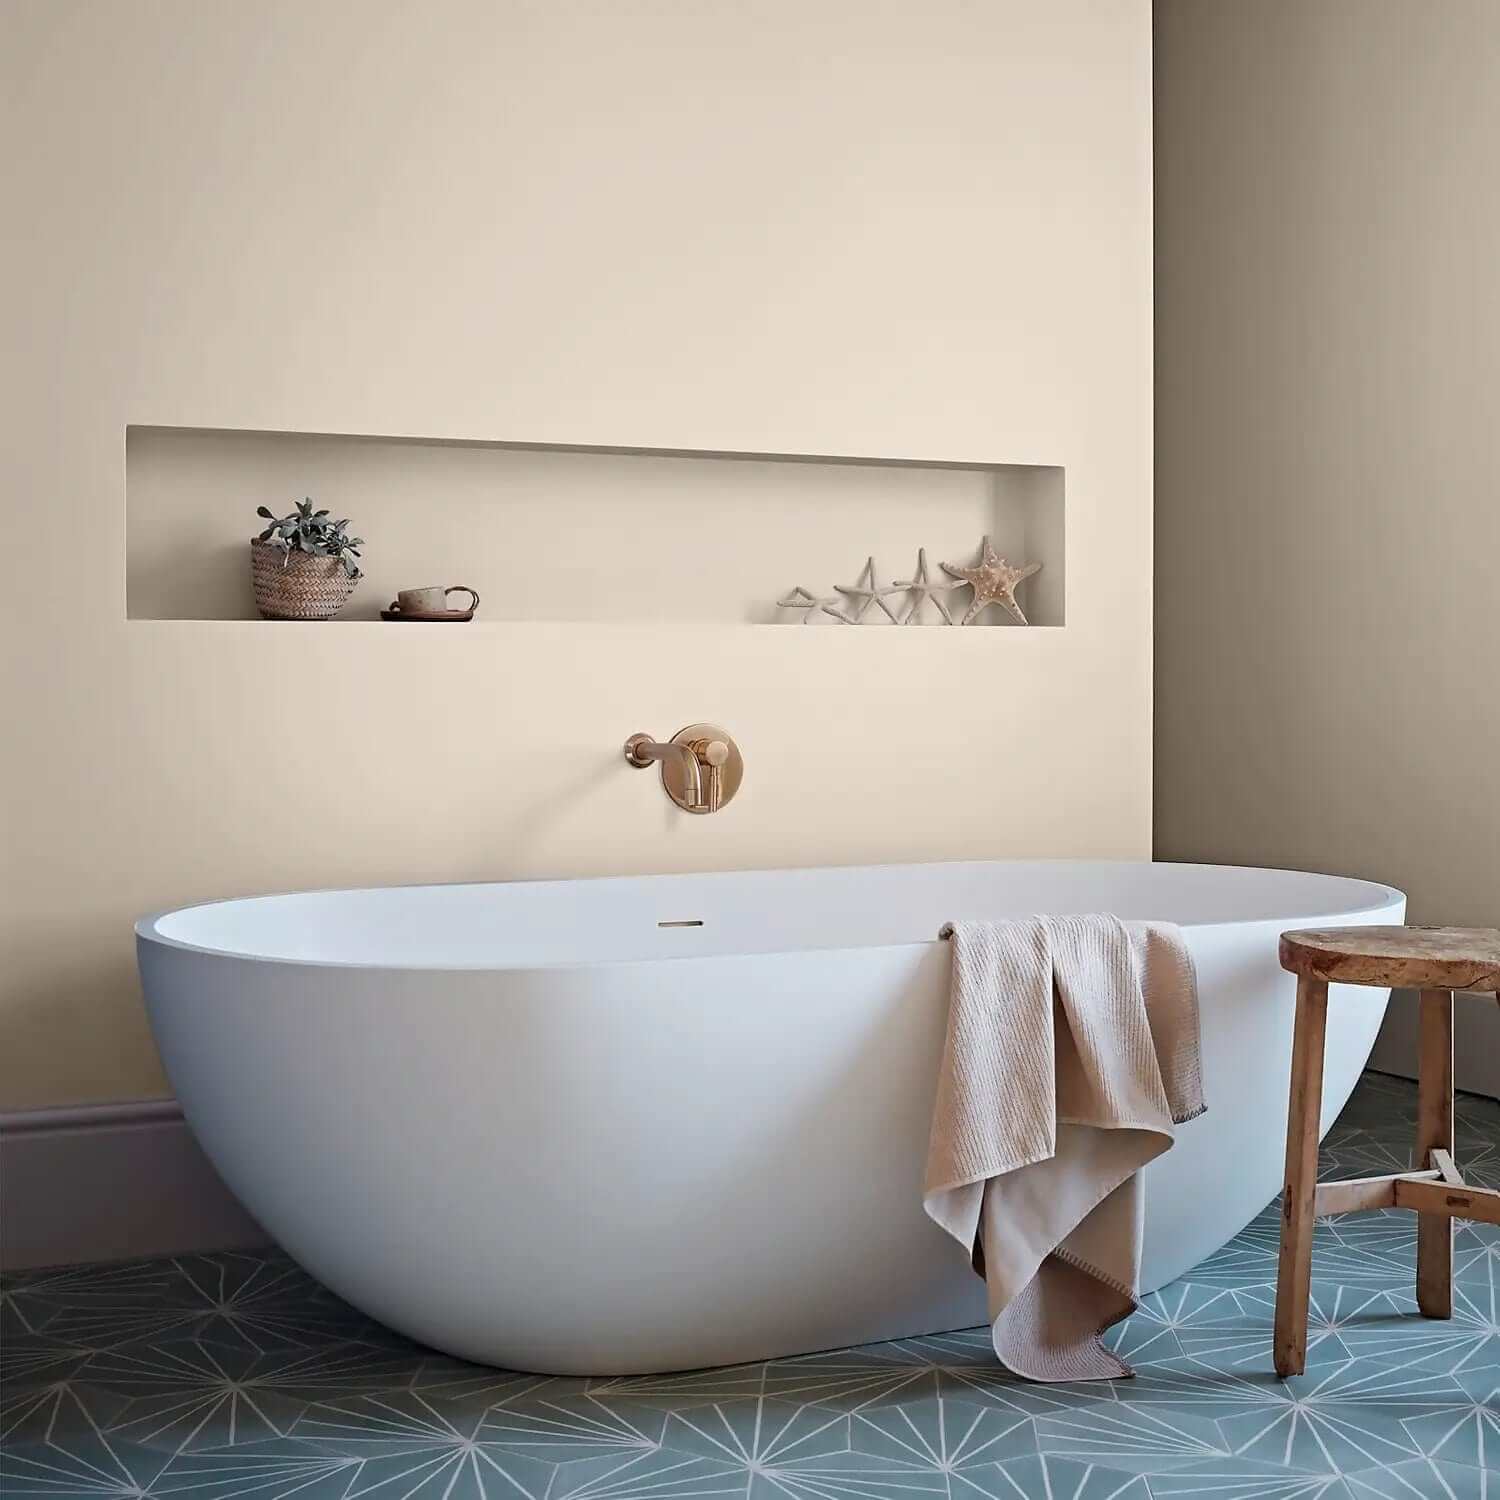 Paint  -  Crown Bathroom Wheatgrass Paint - 2.5L  -  50156036